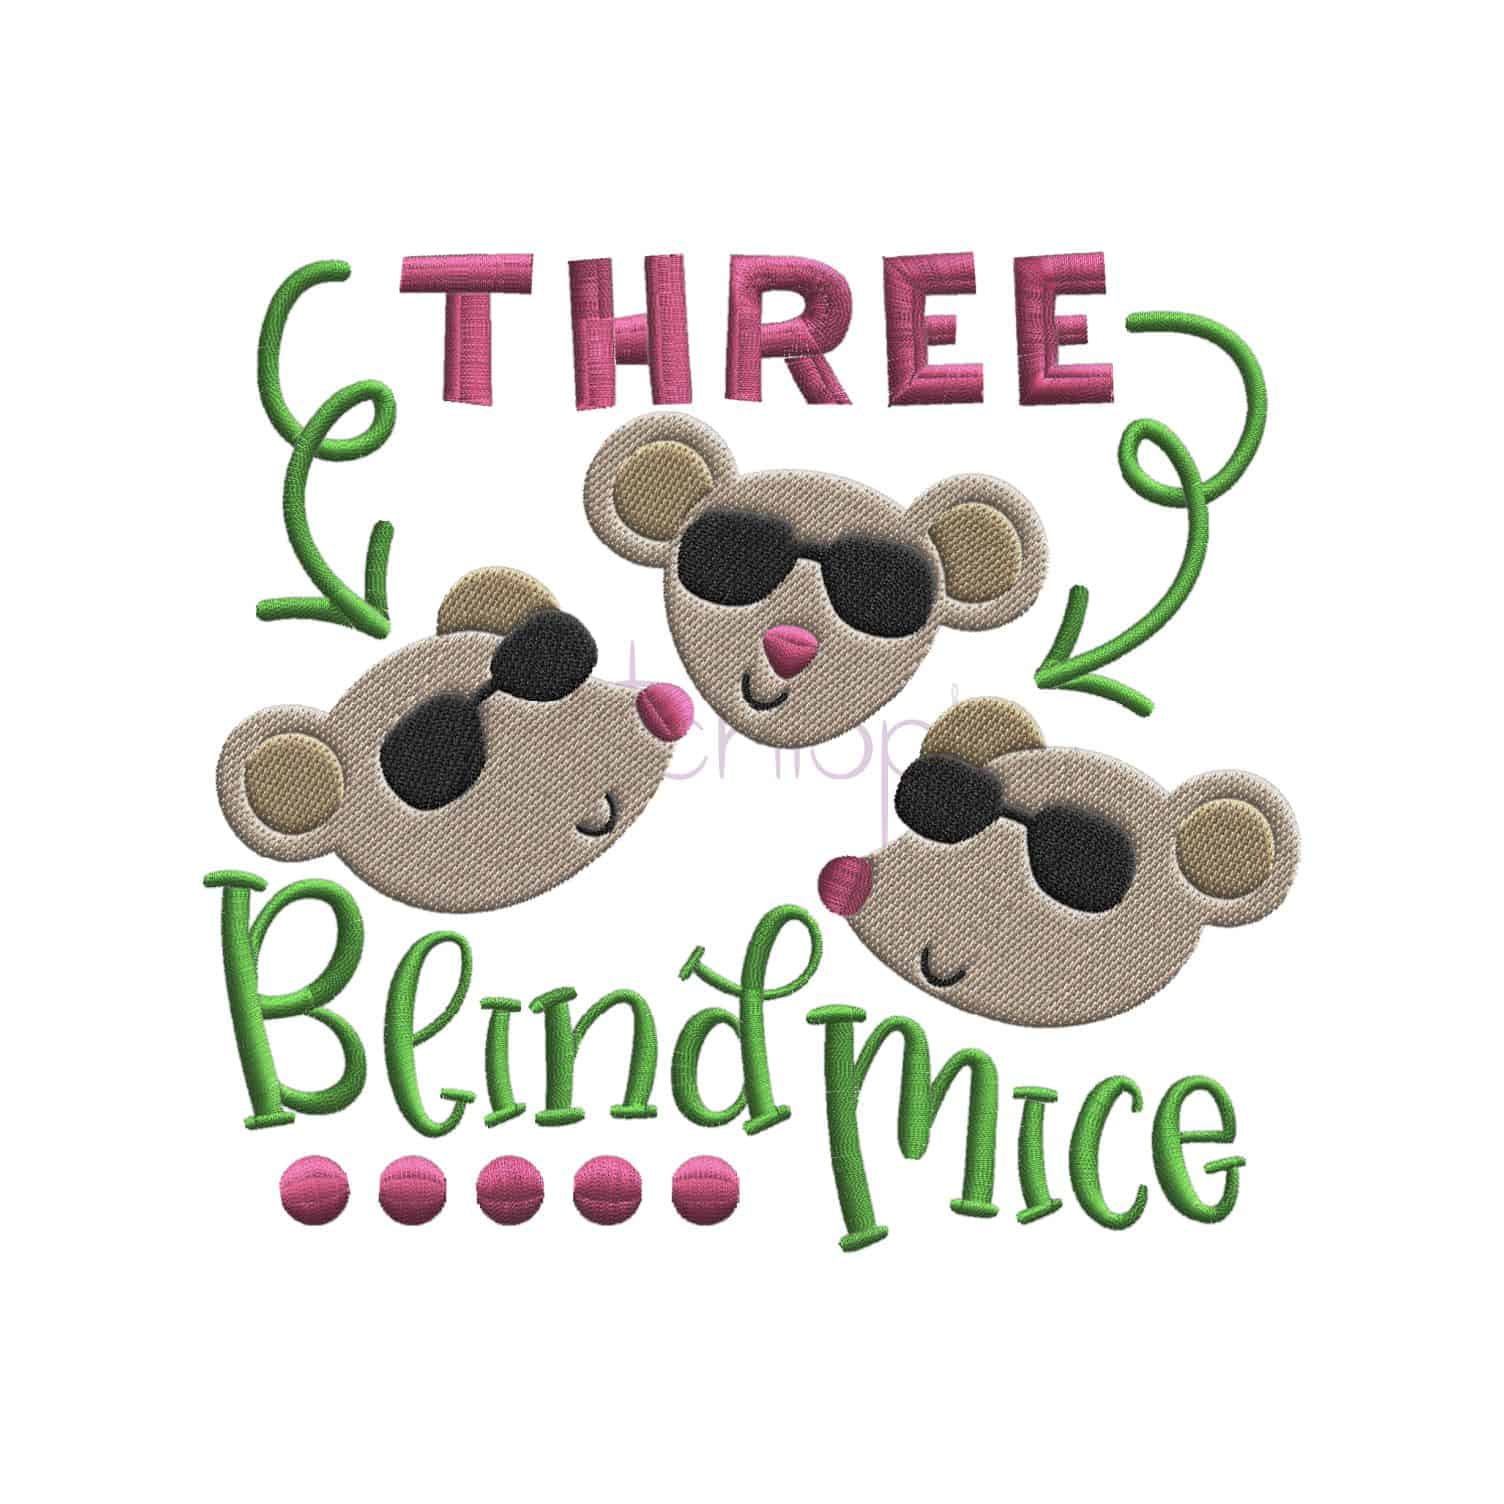 Three Blind Mice NR4 FREE US SHIPPING Nursery Rhyme Button LgSz